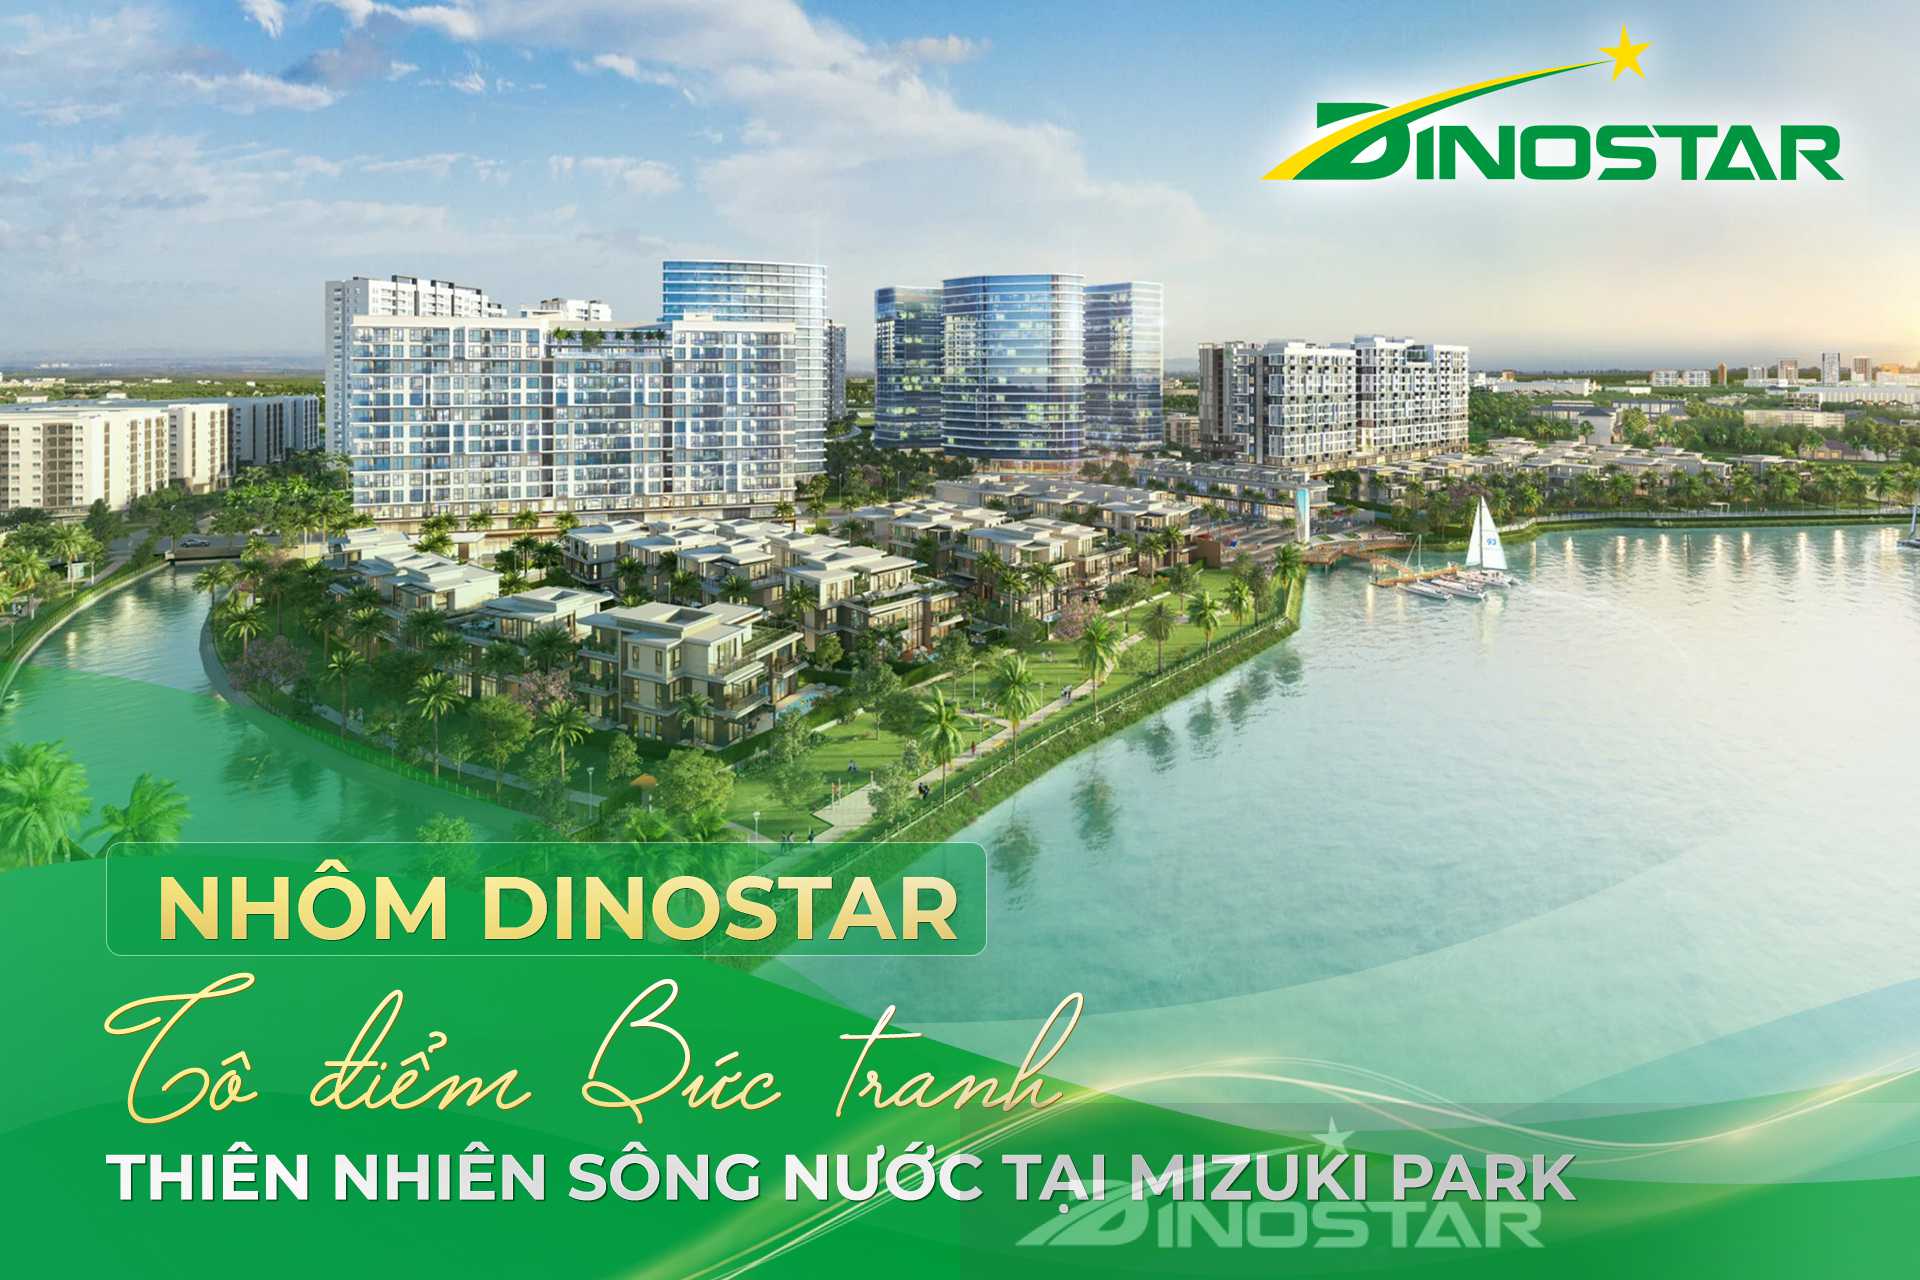 Dinostar Aluminum enhances the natural landscape of Mizuki Park